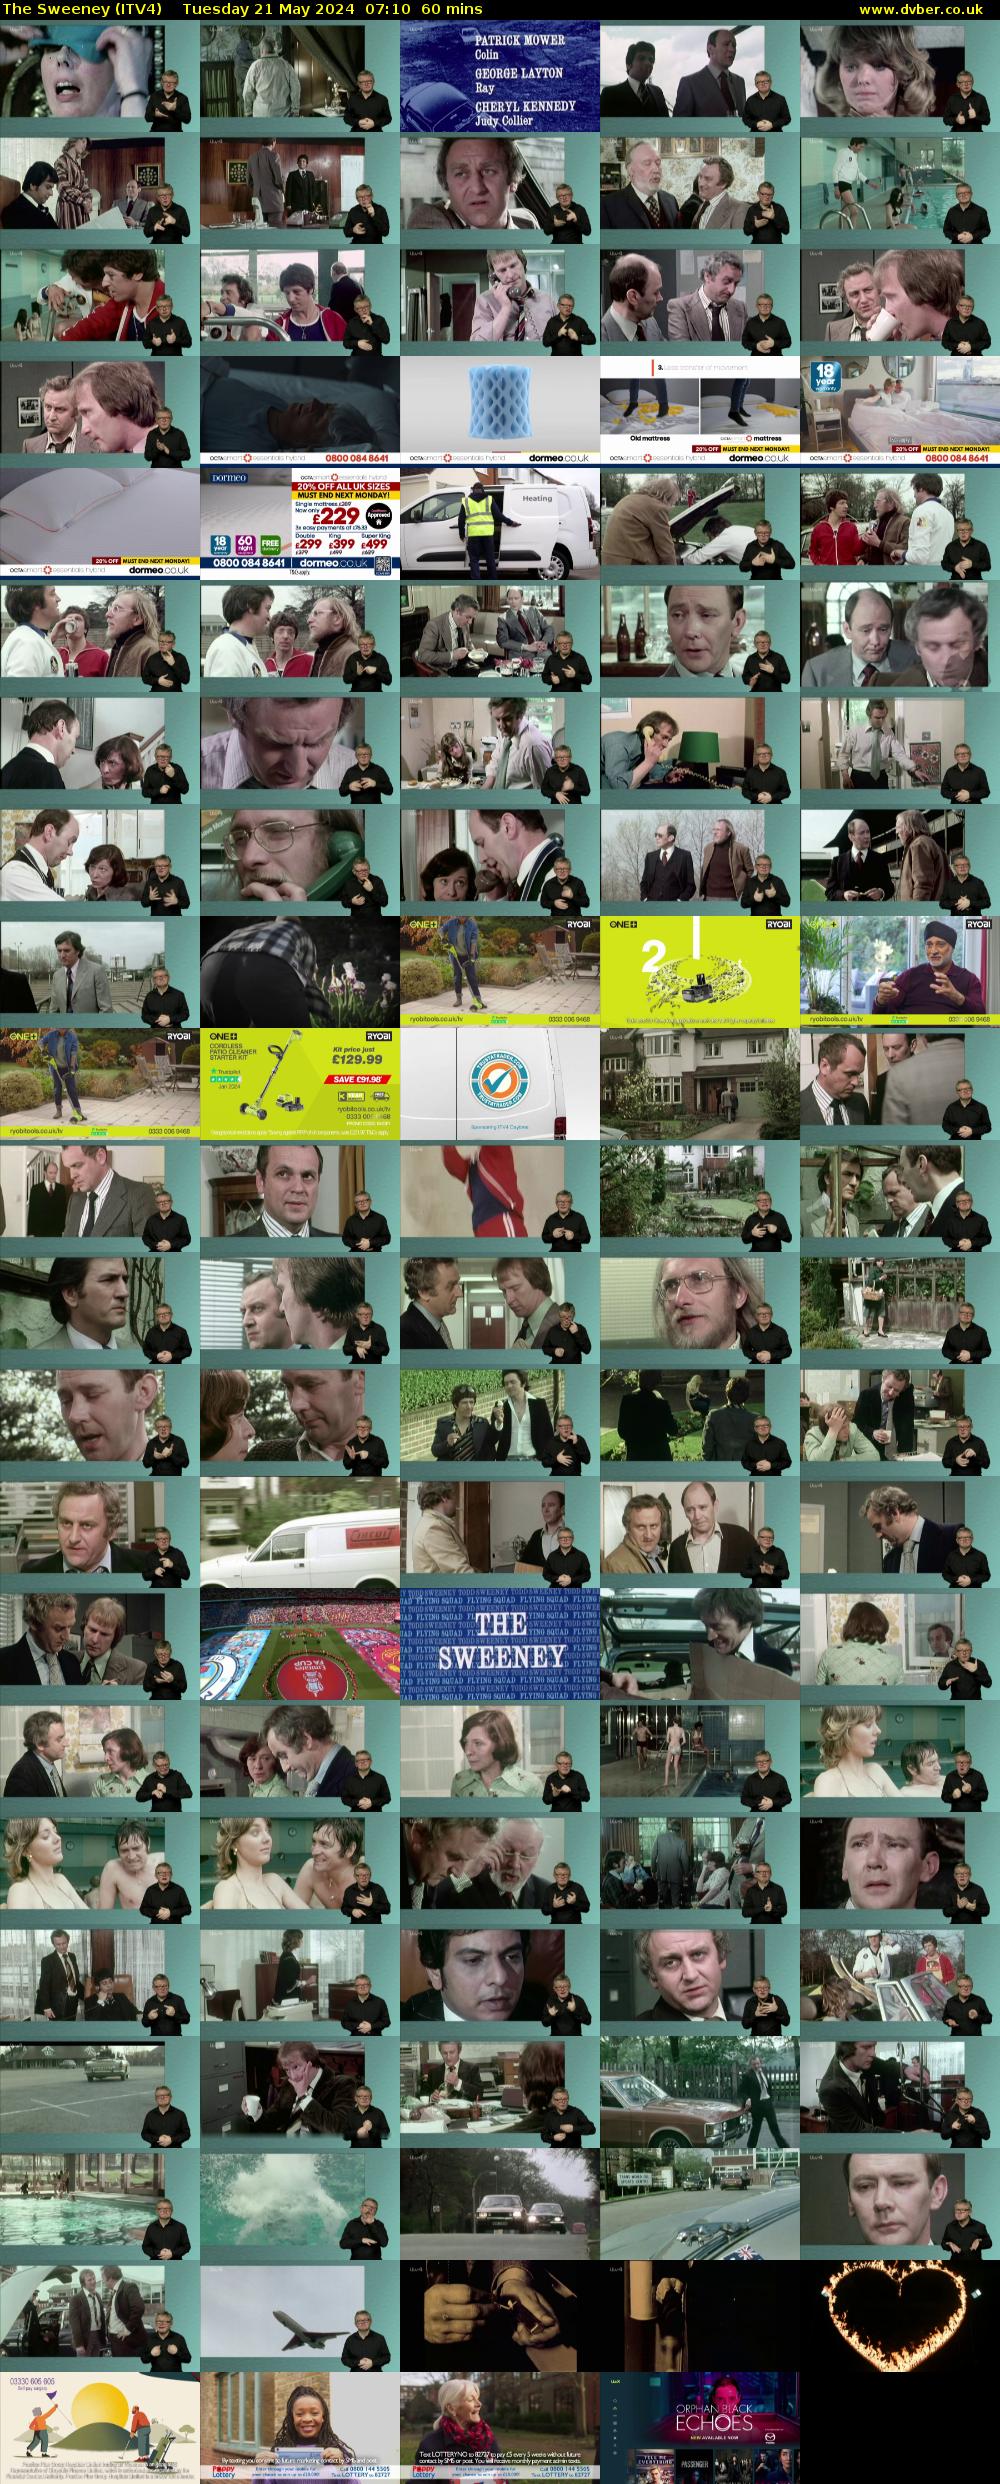 The Sweeney (ITV4) Tuesday 21 May 2024 07:10 - 08:10